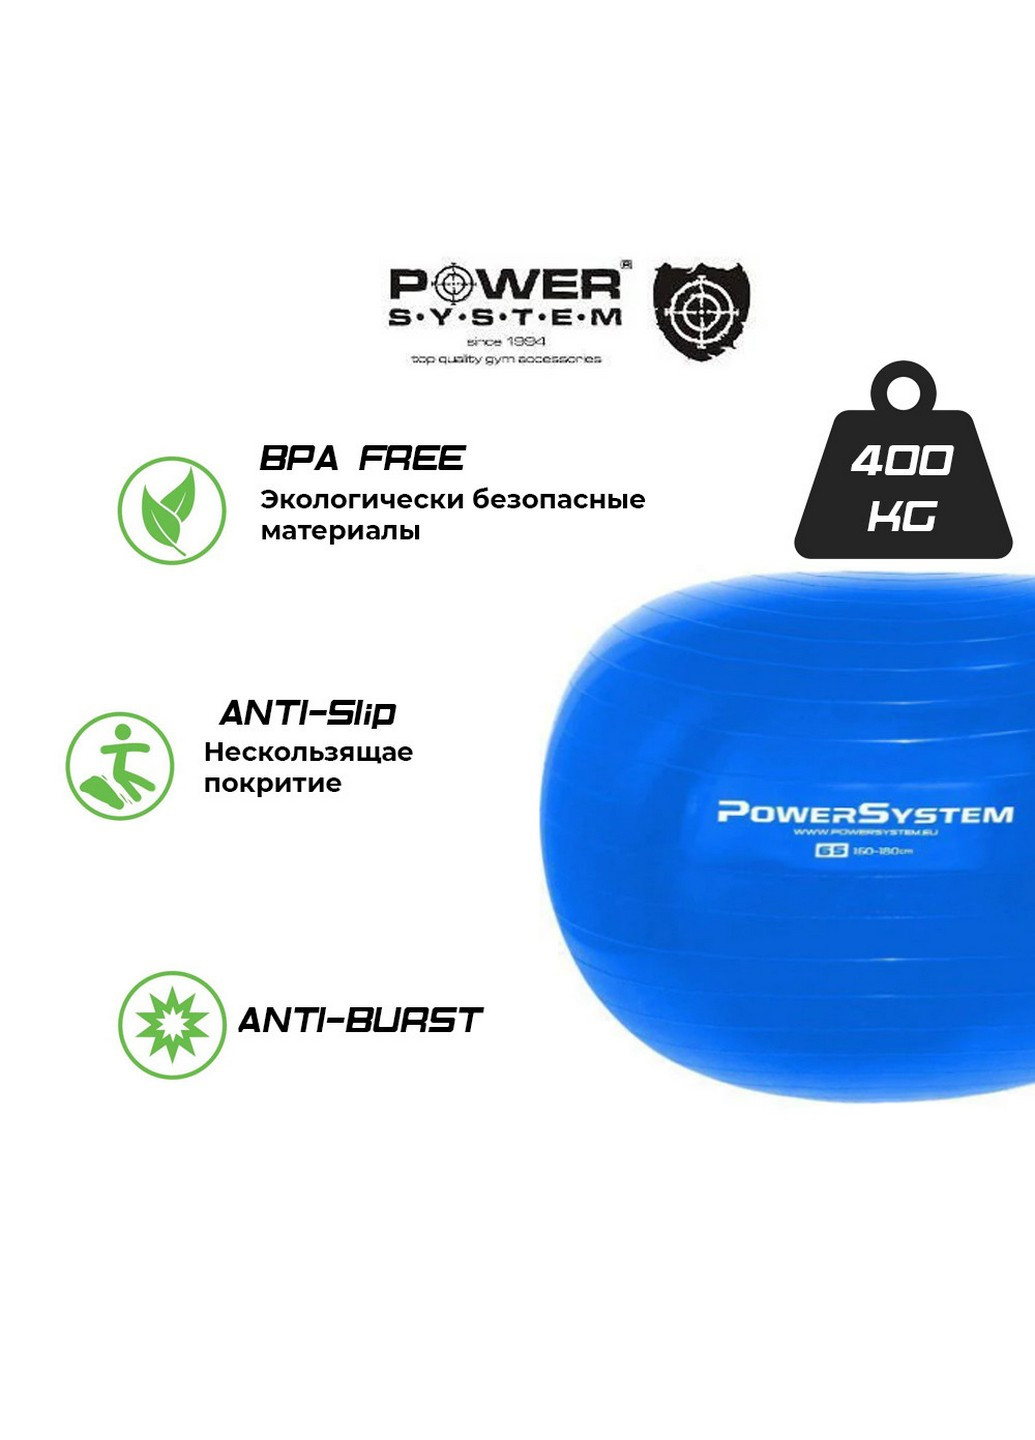 Спортивный мяч для фитнеса 75х75 см Power System (253662060)